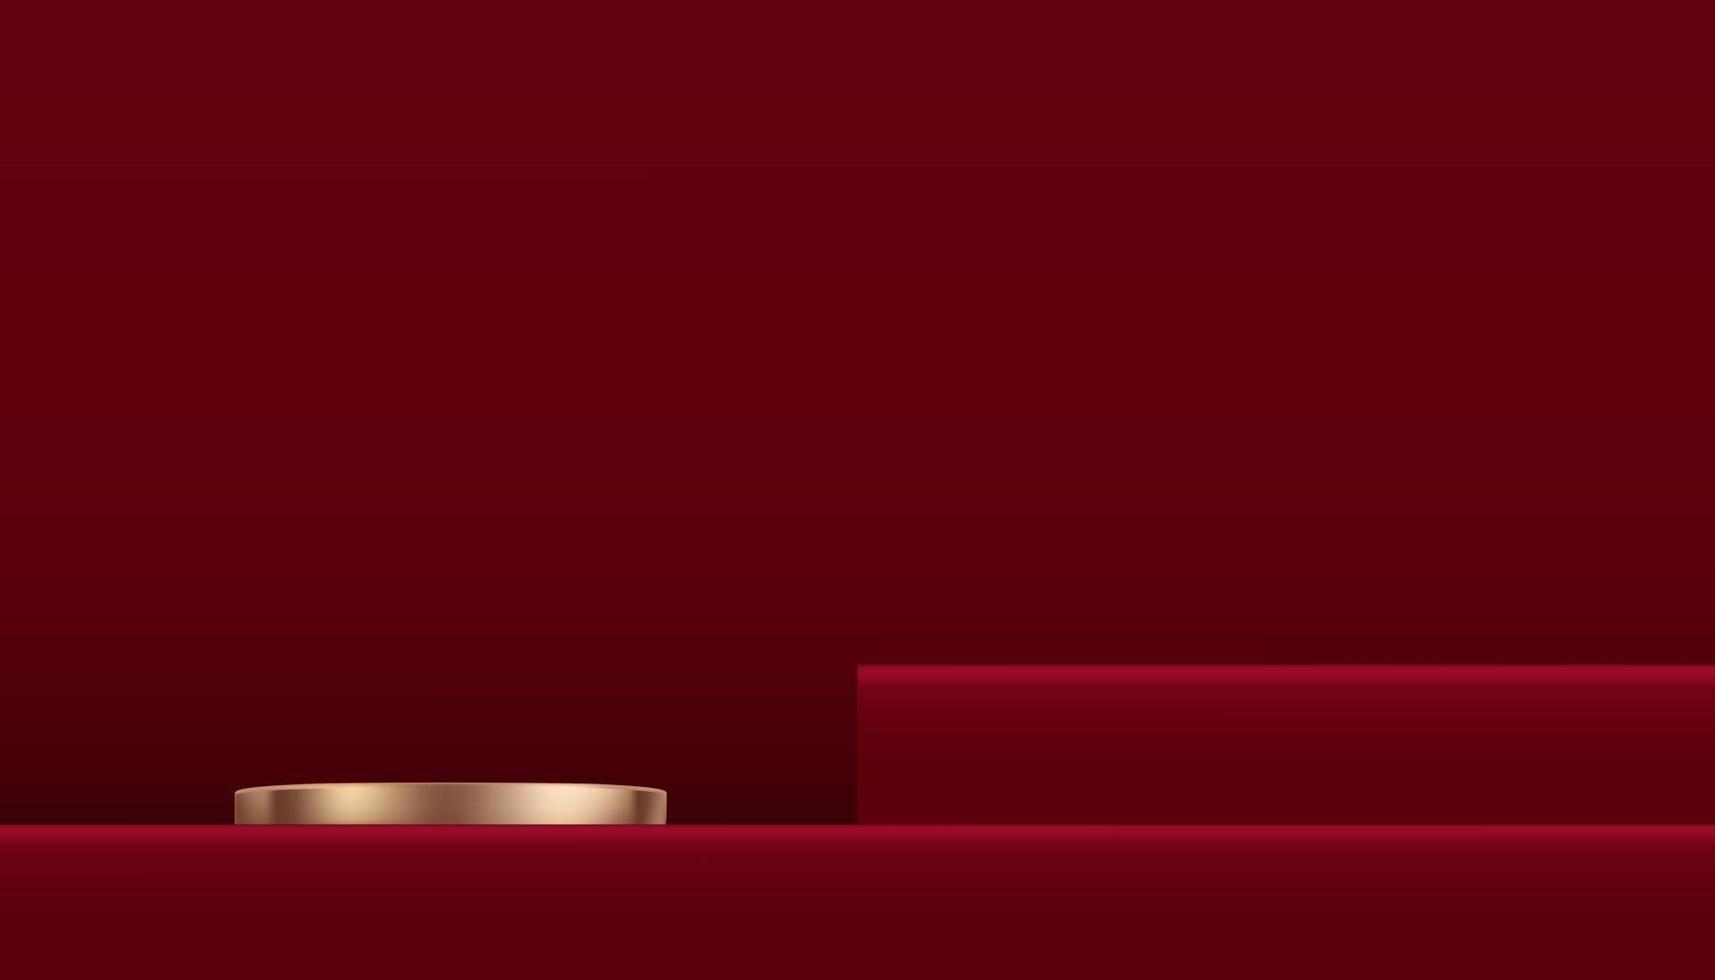 Podio de cilindro de oro rosa con pantalla 3d sobre fondo de pared roja,  escena de